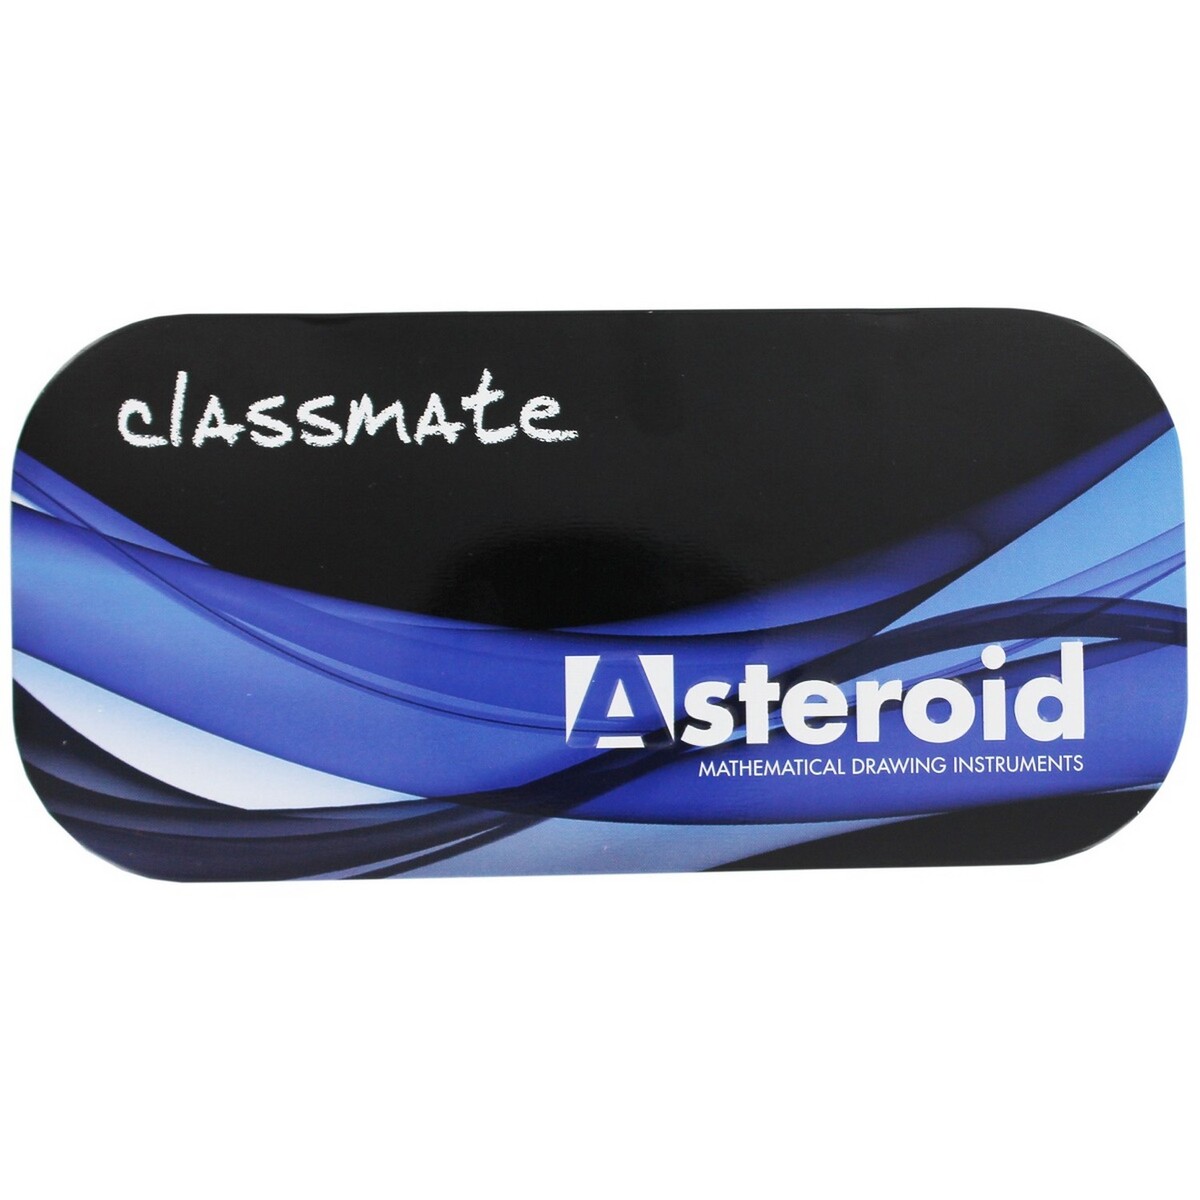 Classmate Asteroid Mathematical Geometry Box 4010030